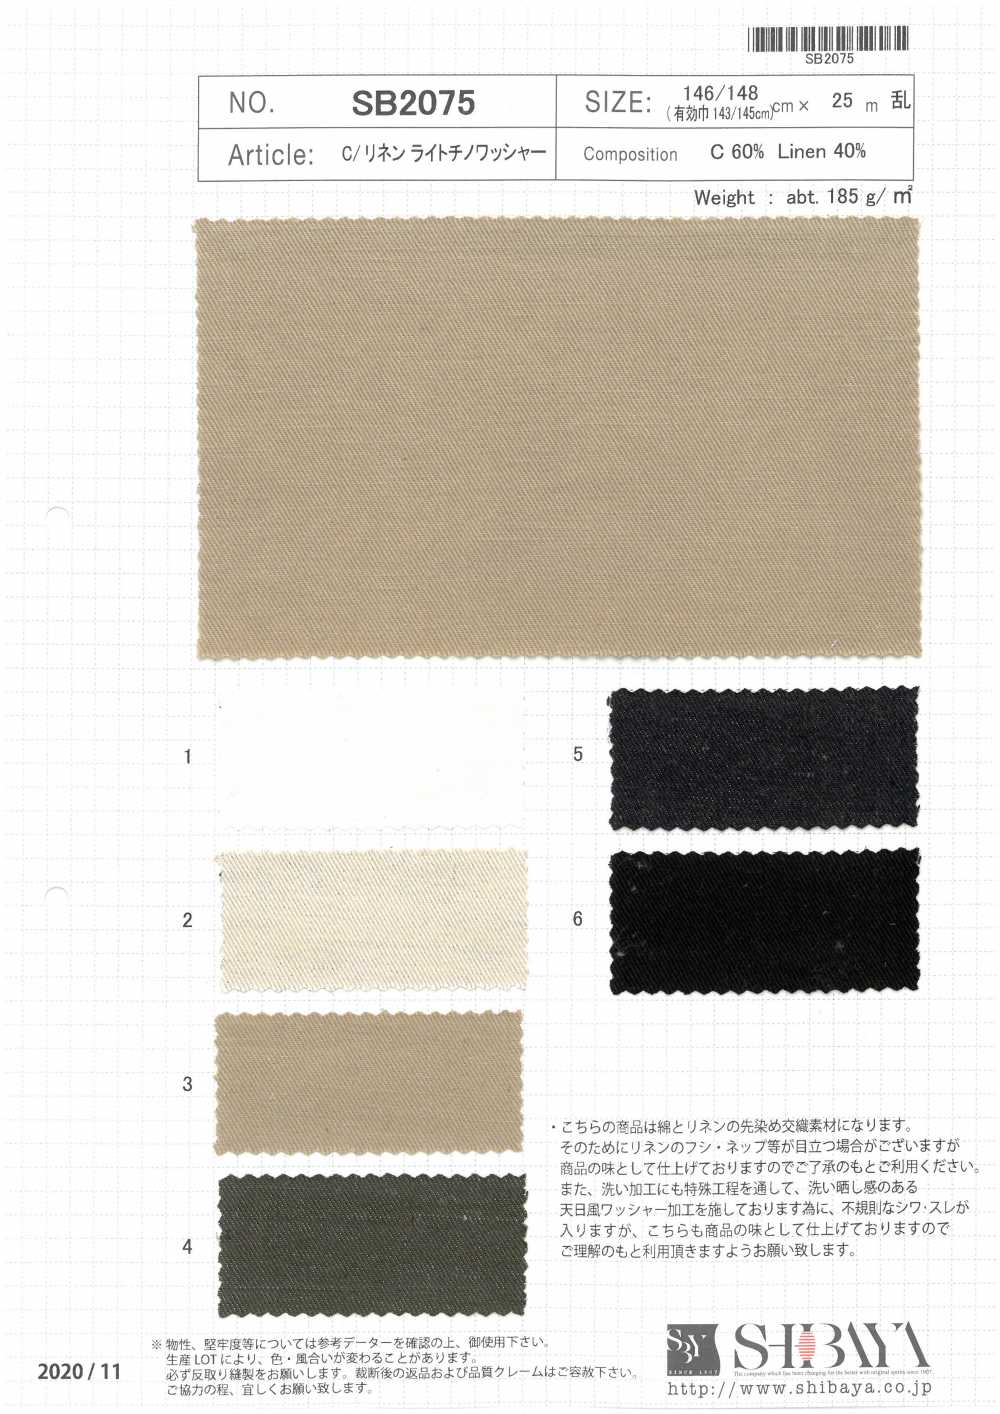 SB2075 C / Linen Light Chino Washer Processing[Textile / Fabric] SHIBAYA